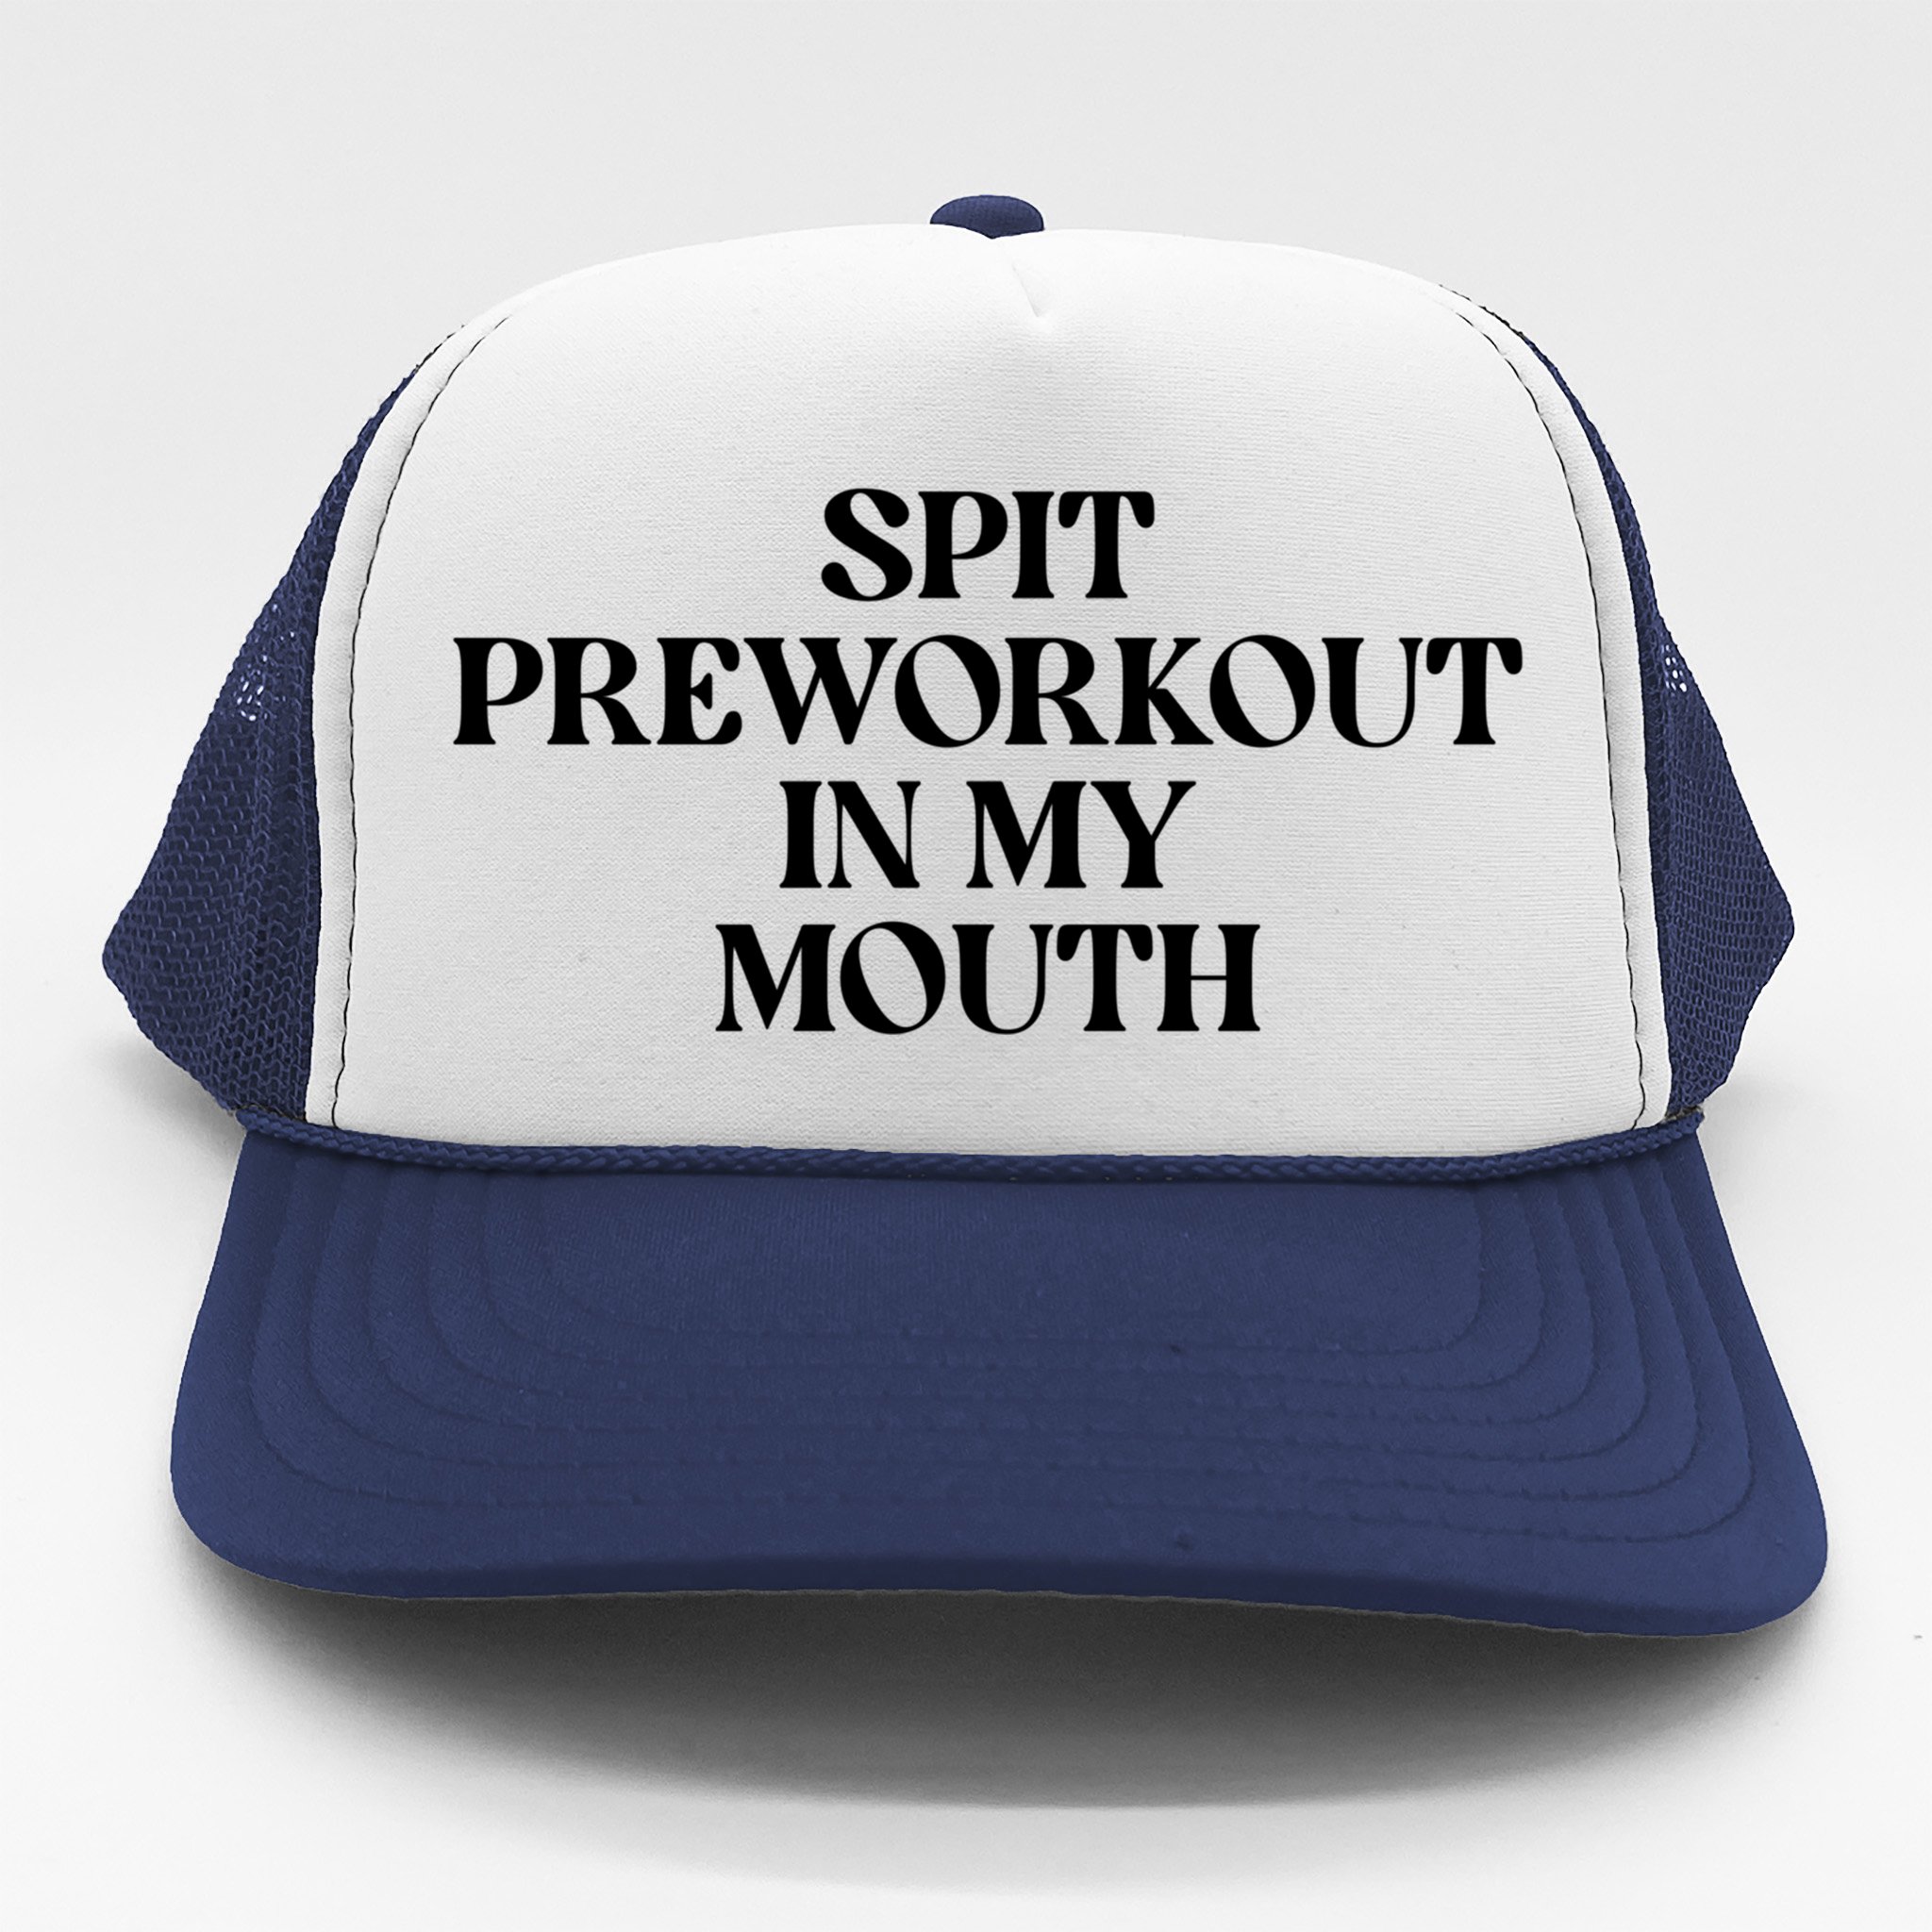 Spit Preworkout in My Mouth Hats Funny Gym Fashion Cap Funny Gym Cap Men  Women